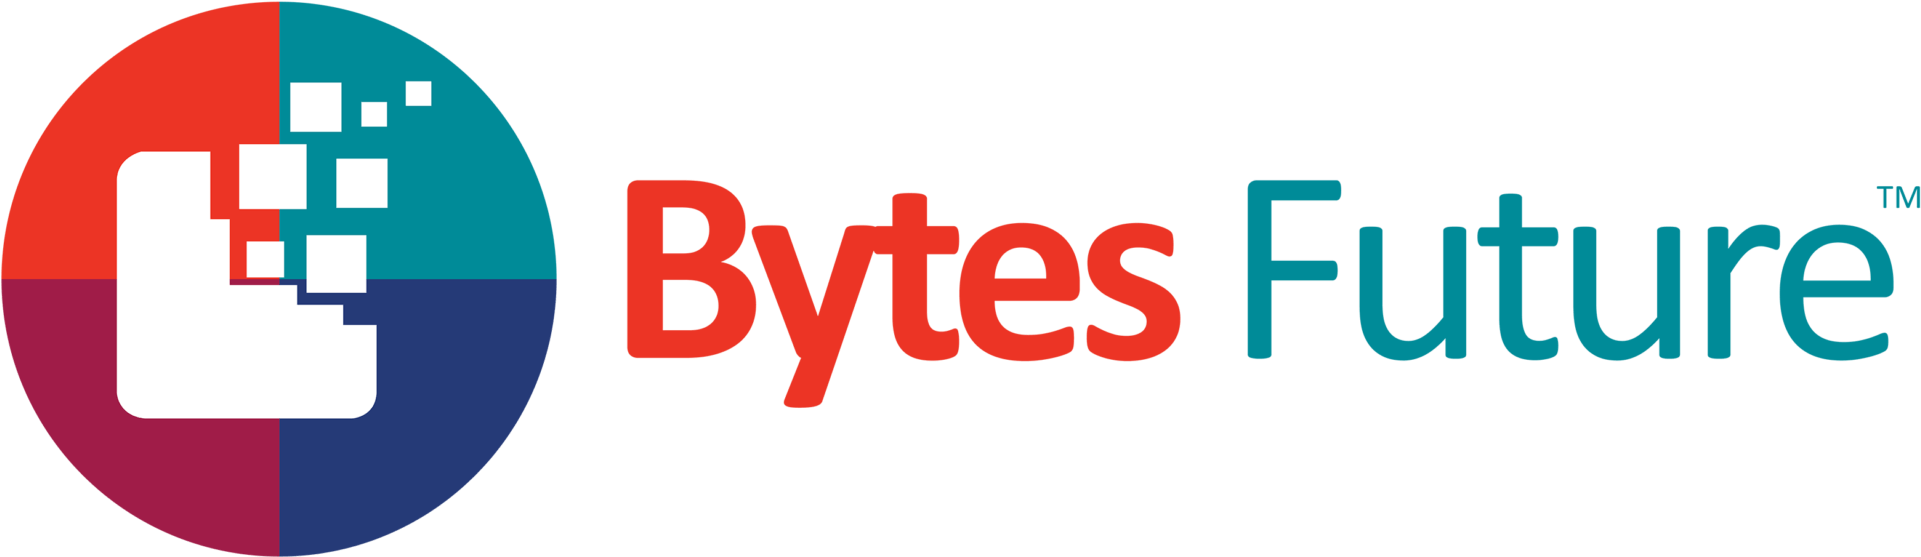 Bytes Future Logo PNG